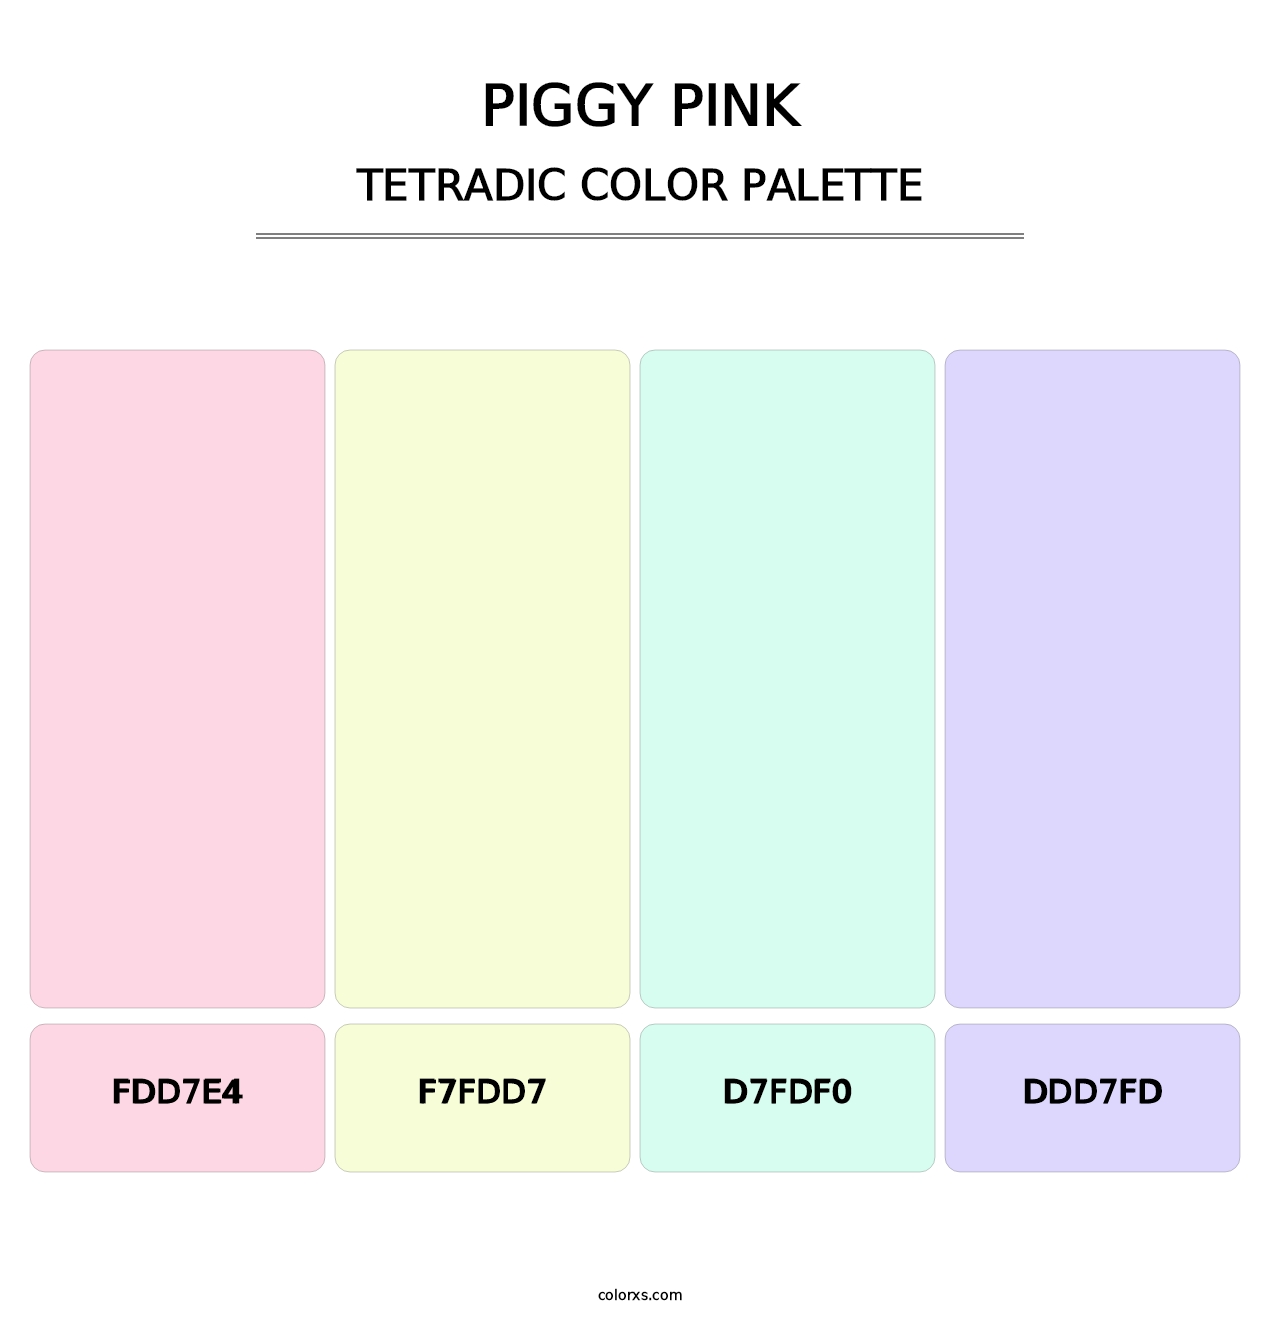 Piggy Pink - Tetradic Color Palette